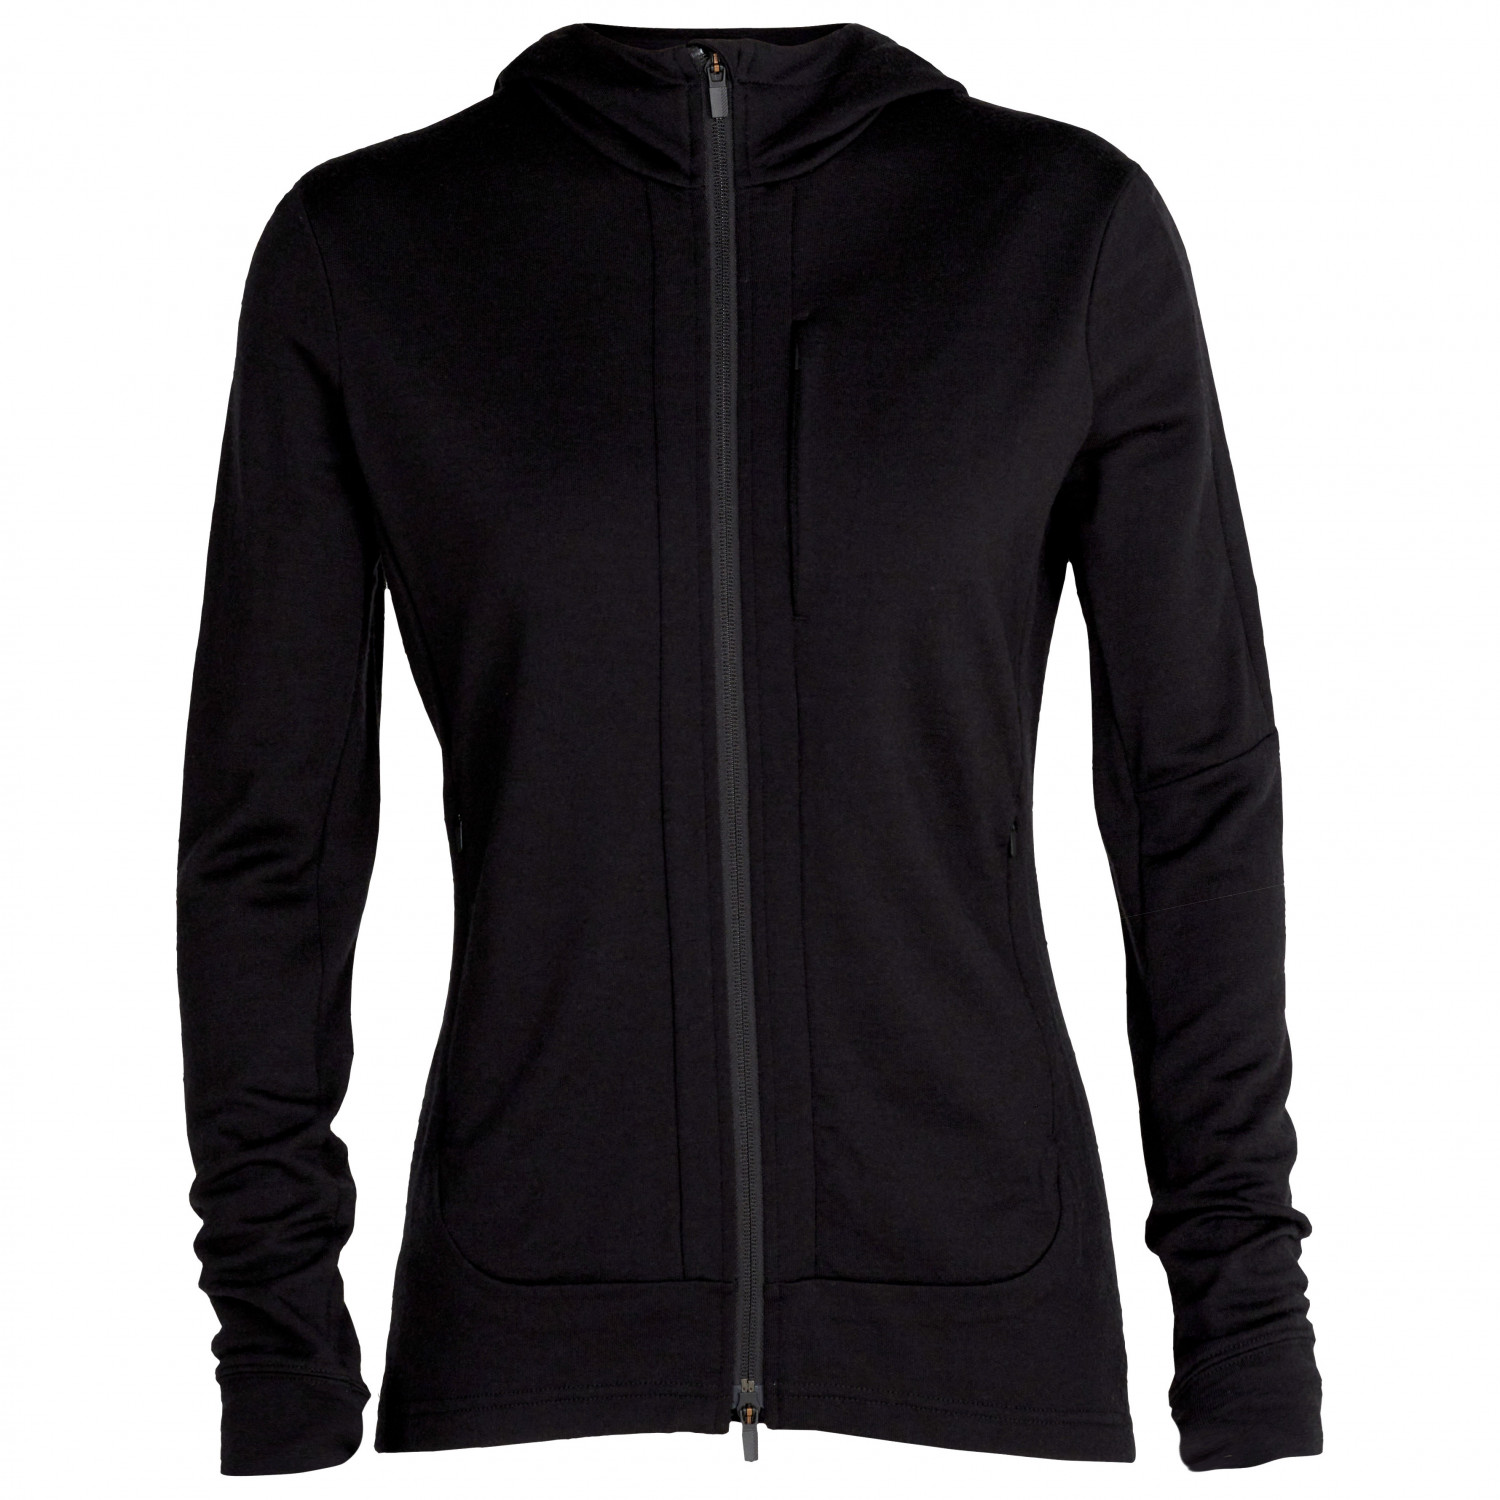 Куртка из мериноса Icebreaker Women's Quantum III L/S Zip Hood, черный куртка из мериноса icebreaker women s quantum iii l s zip hood черный